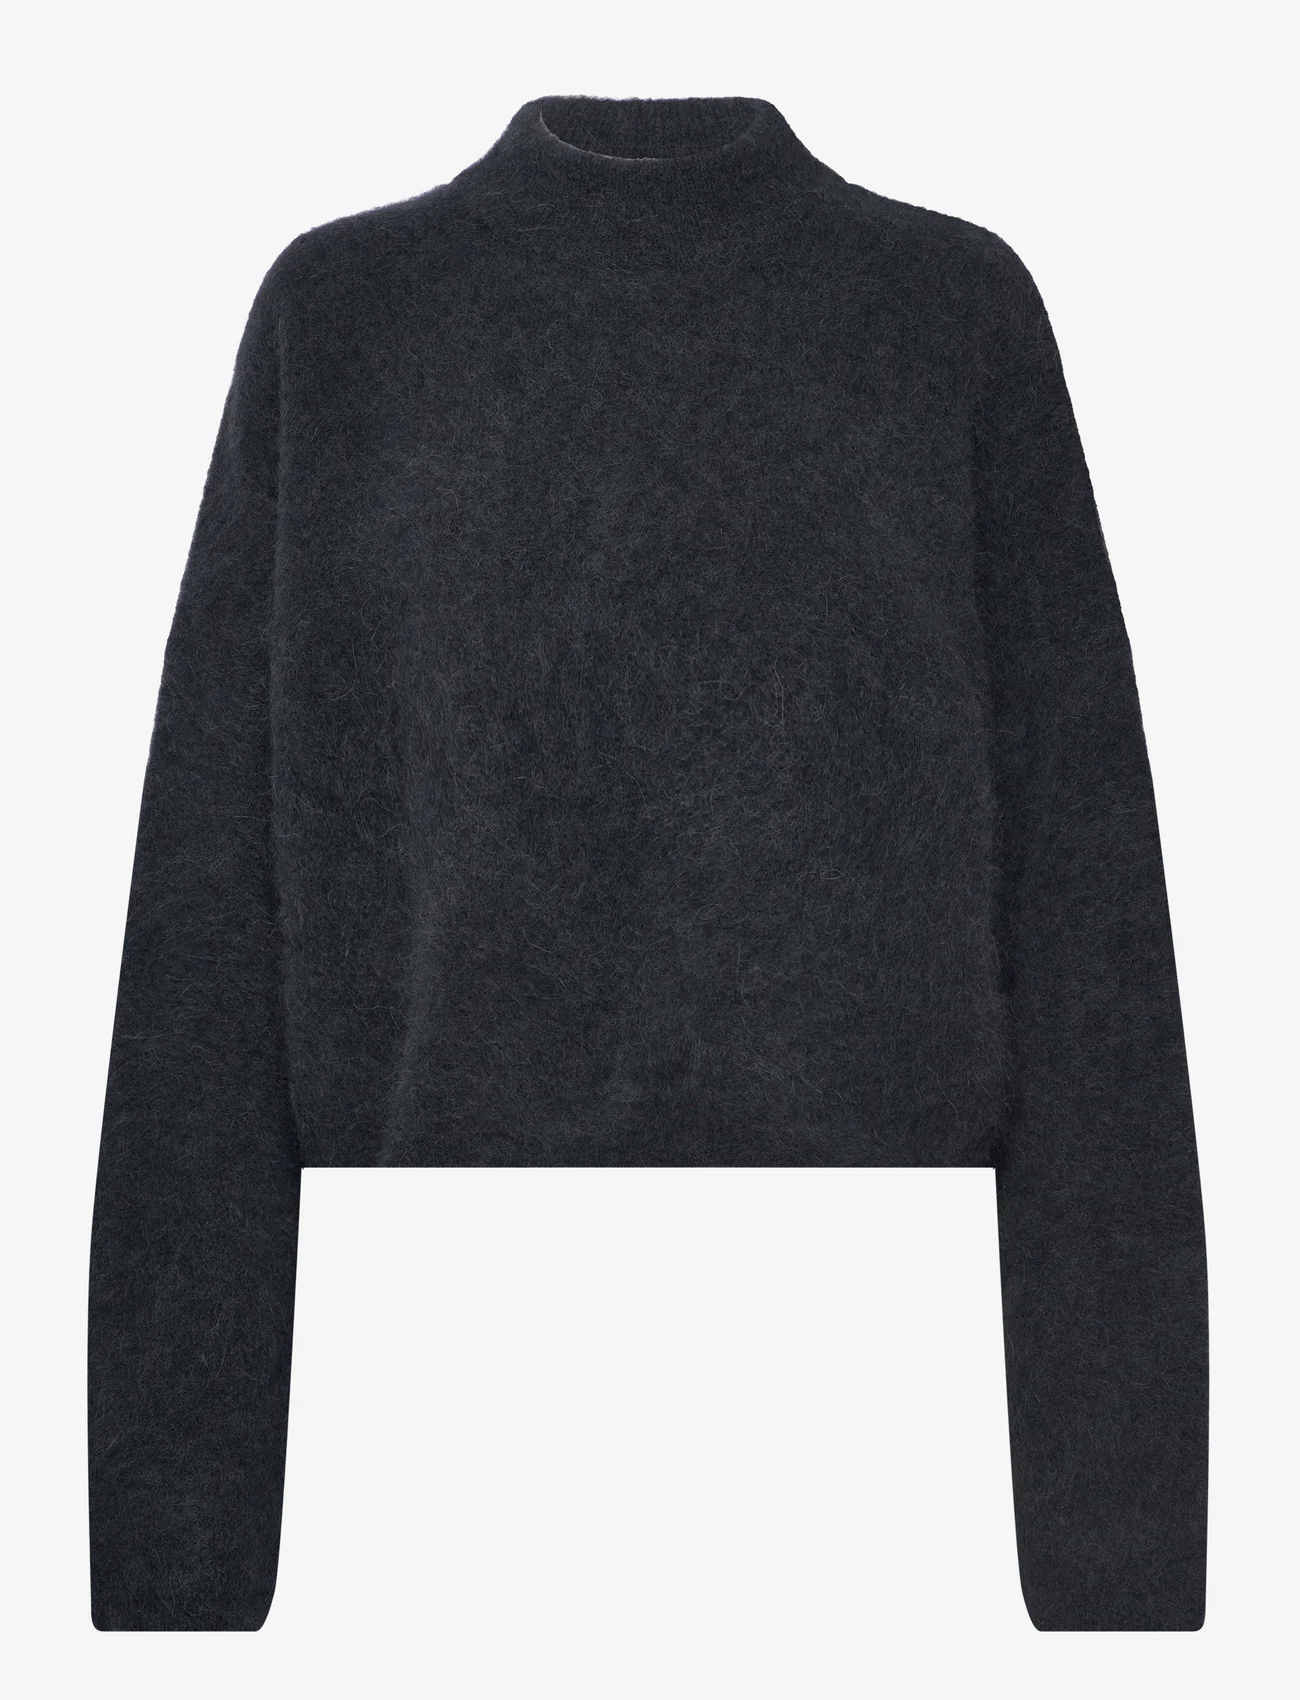 Hope - Boxy Alpaca Sweater - gebreide truien - washed black - 0